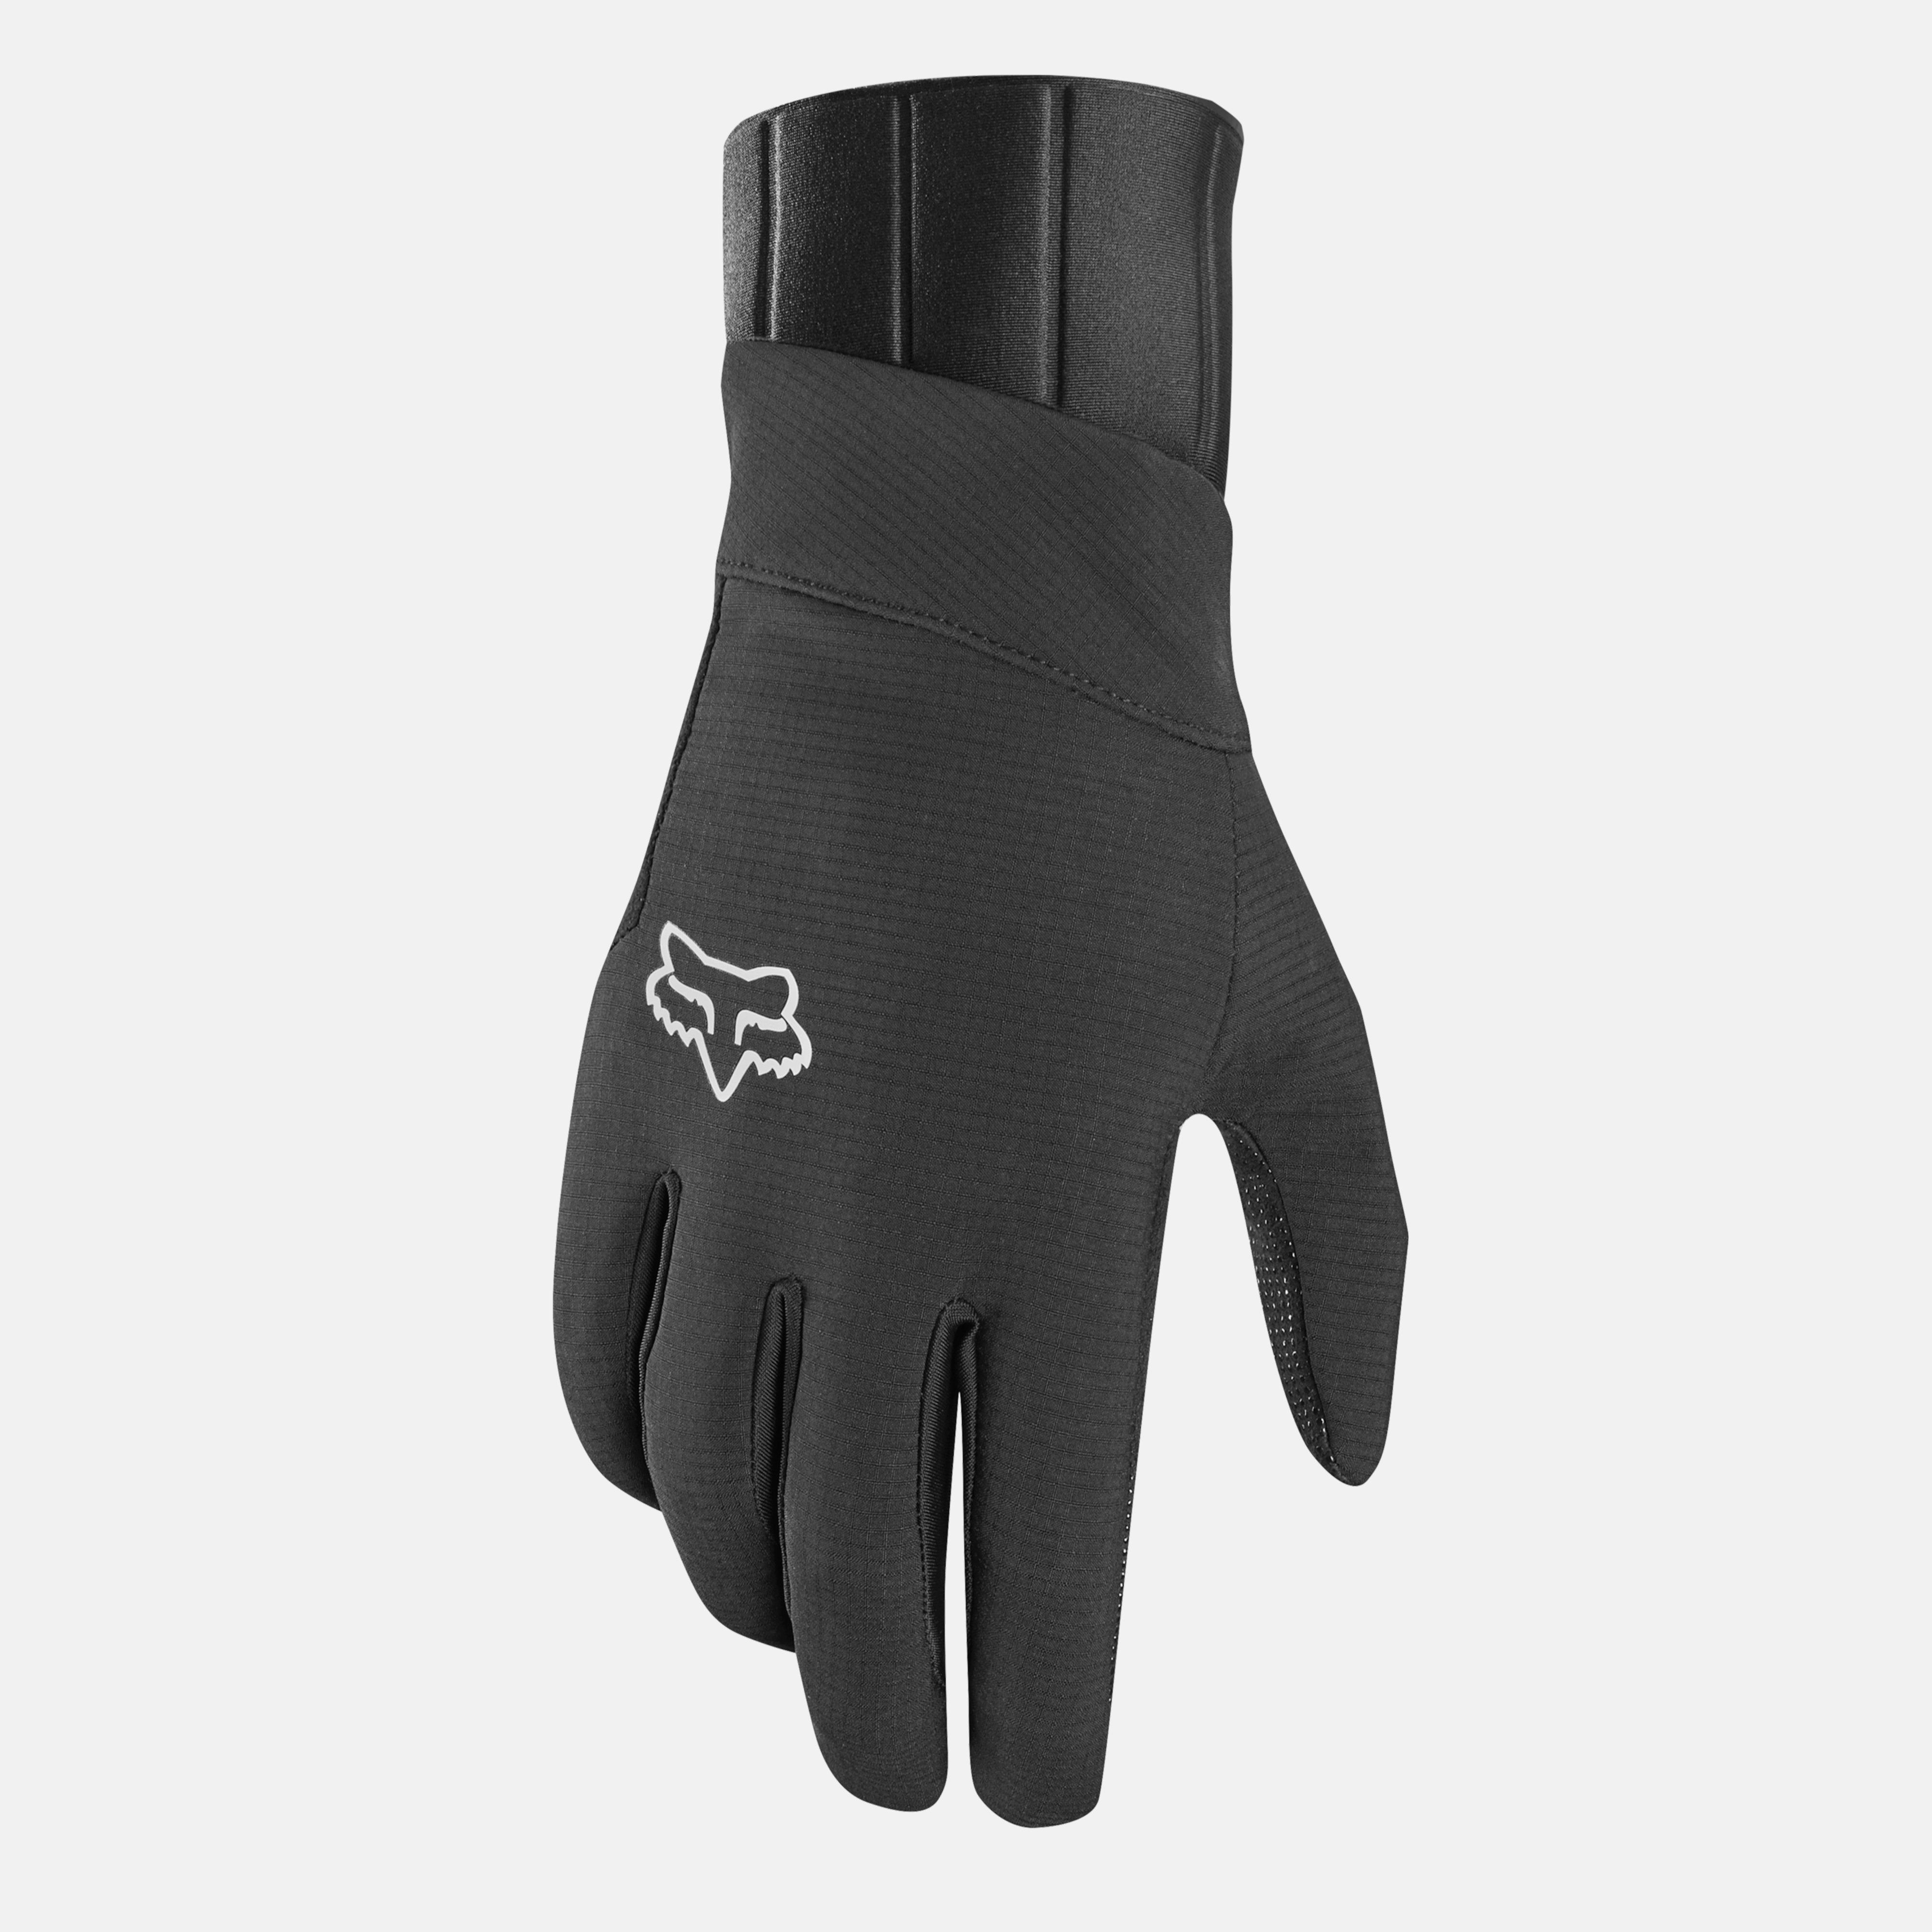 Image of Fox Defend Pro Fire Gloves - Blk/Blk, BLK/BLK